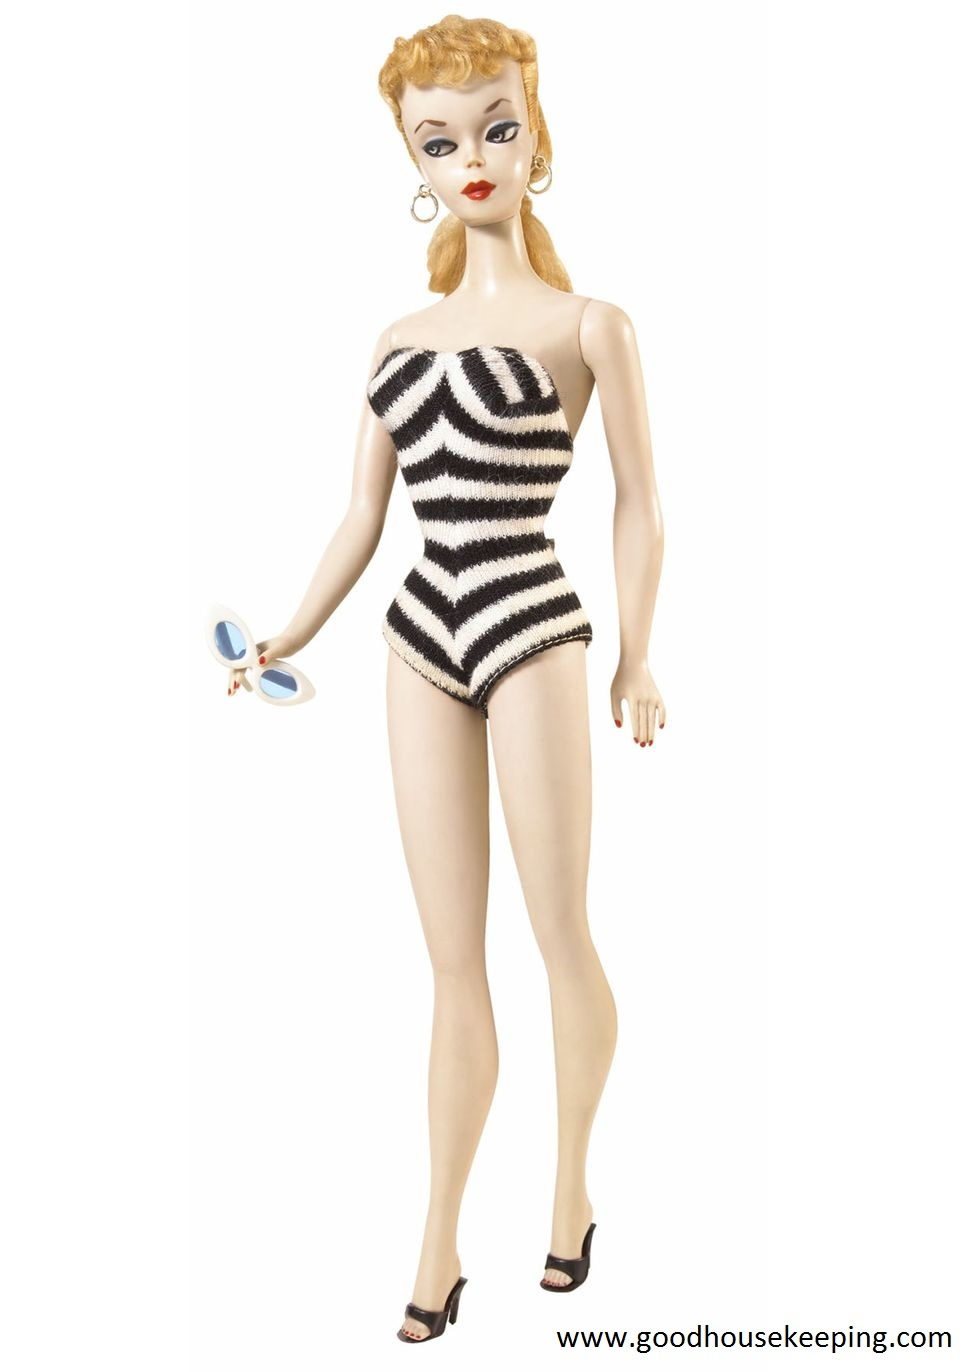 1959 Barbie